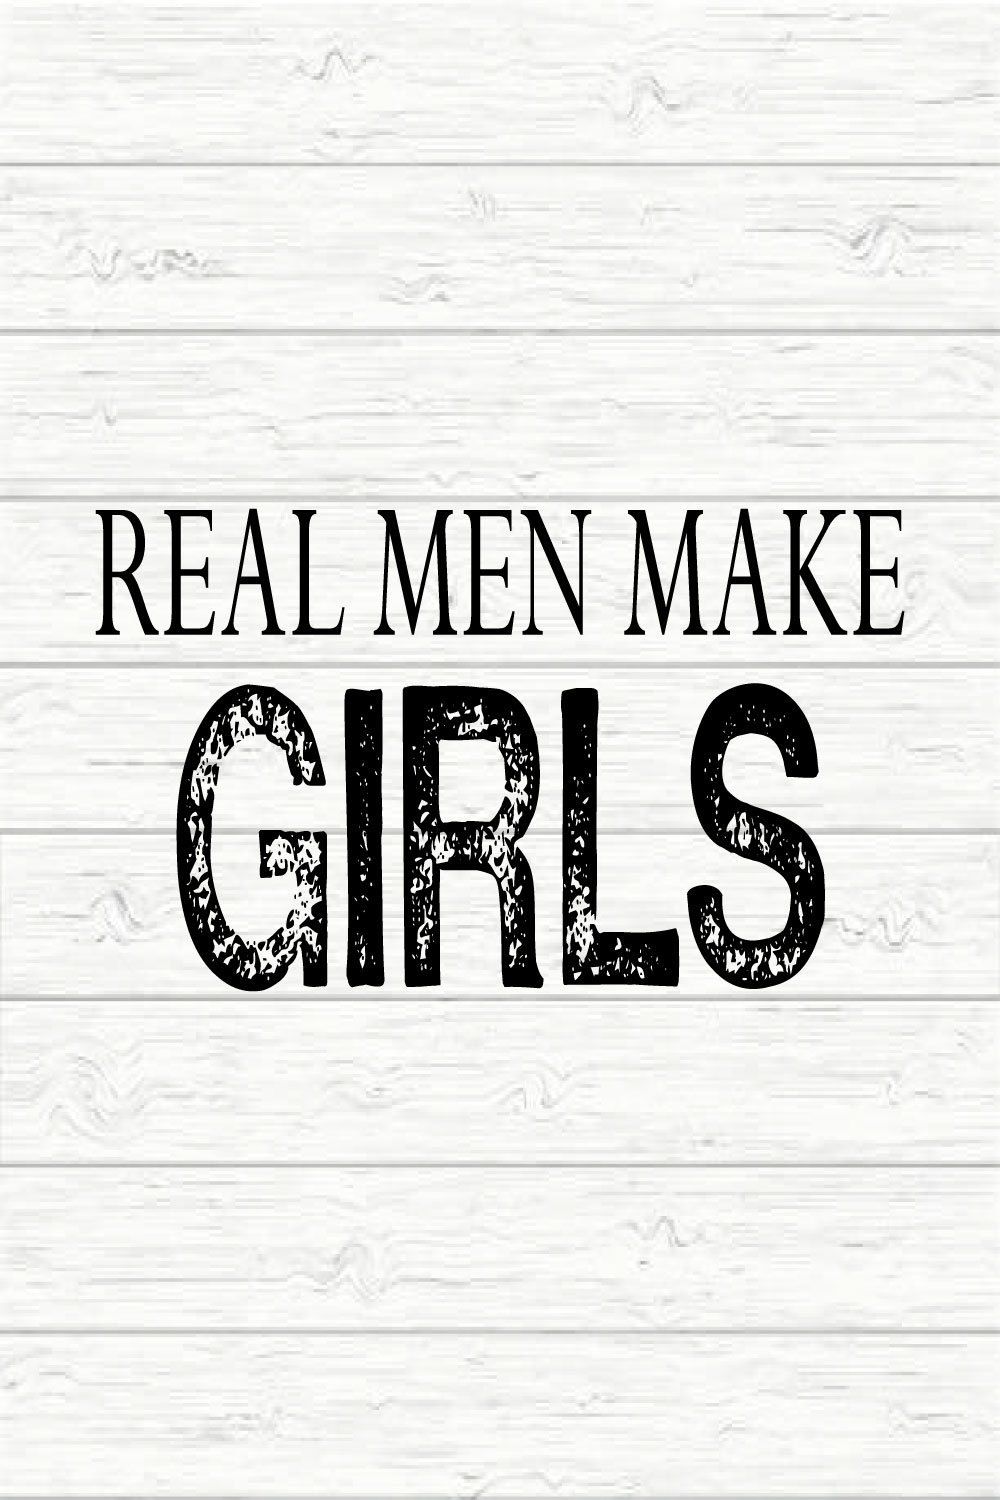 Real Men Make Girls pinterest preview image.